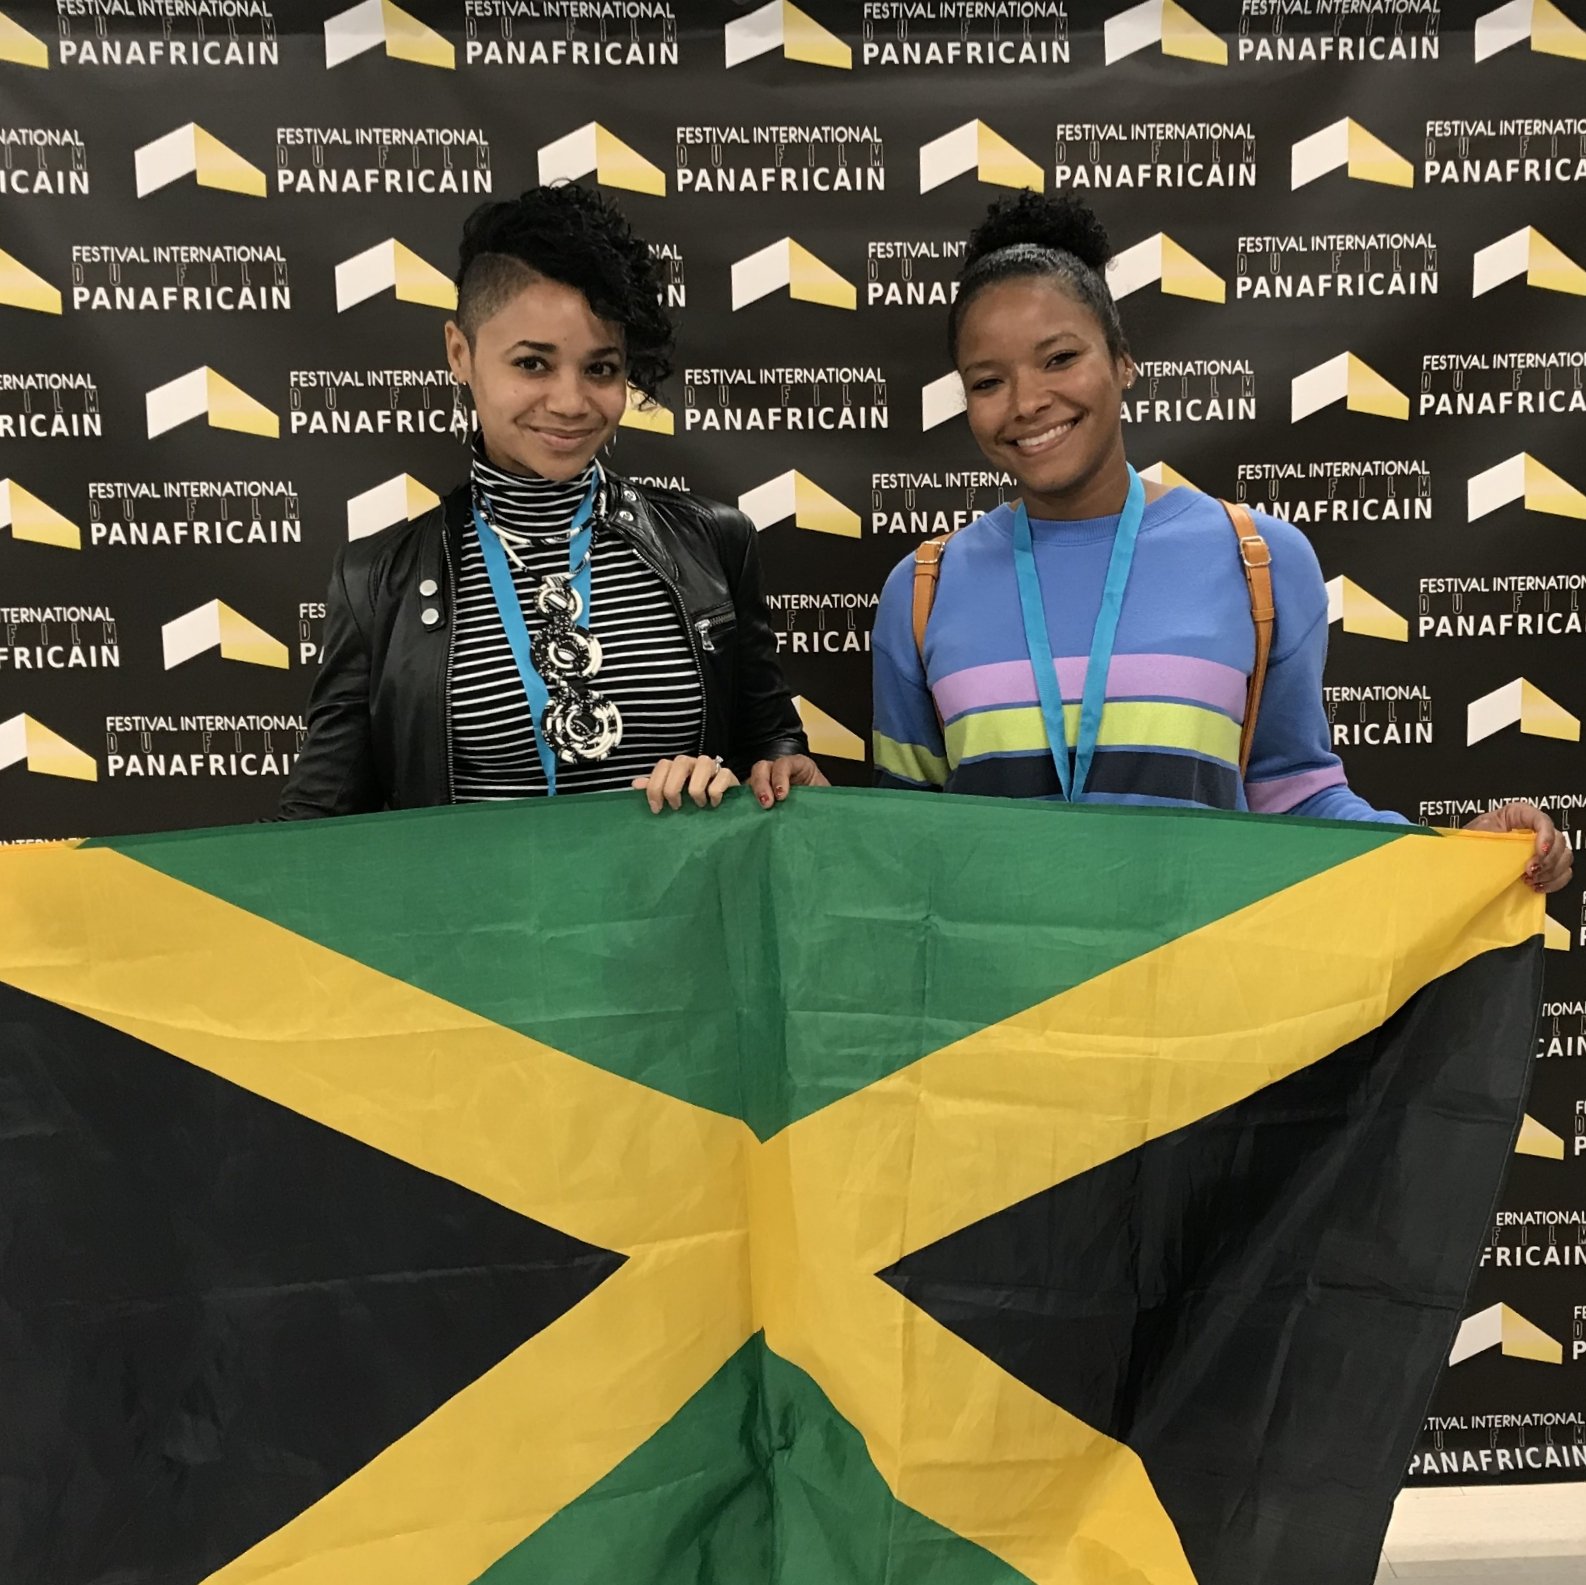 Jamaican Film “Flight” Wins at PanAfrican International Film Festival in Cannes